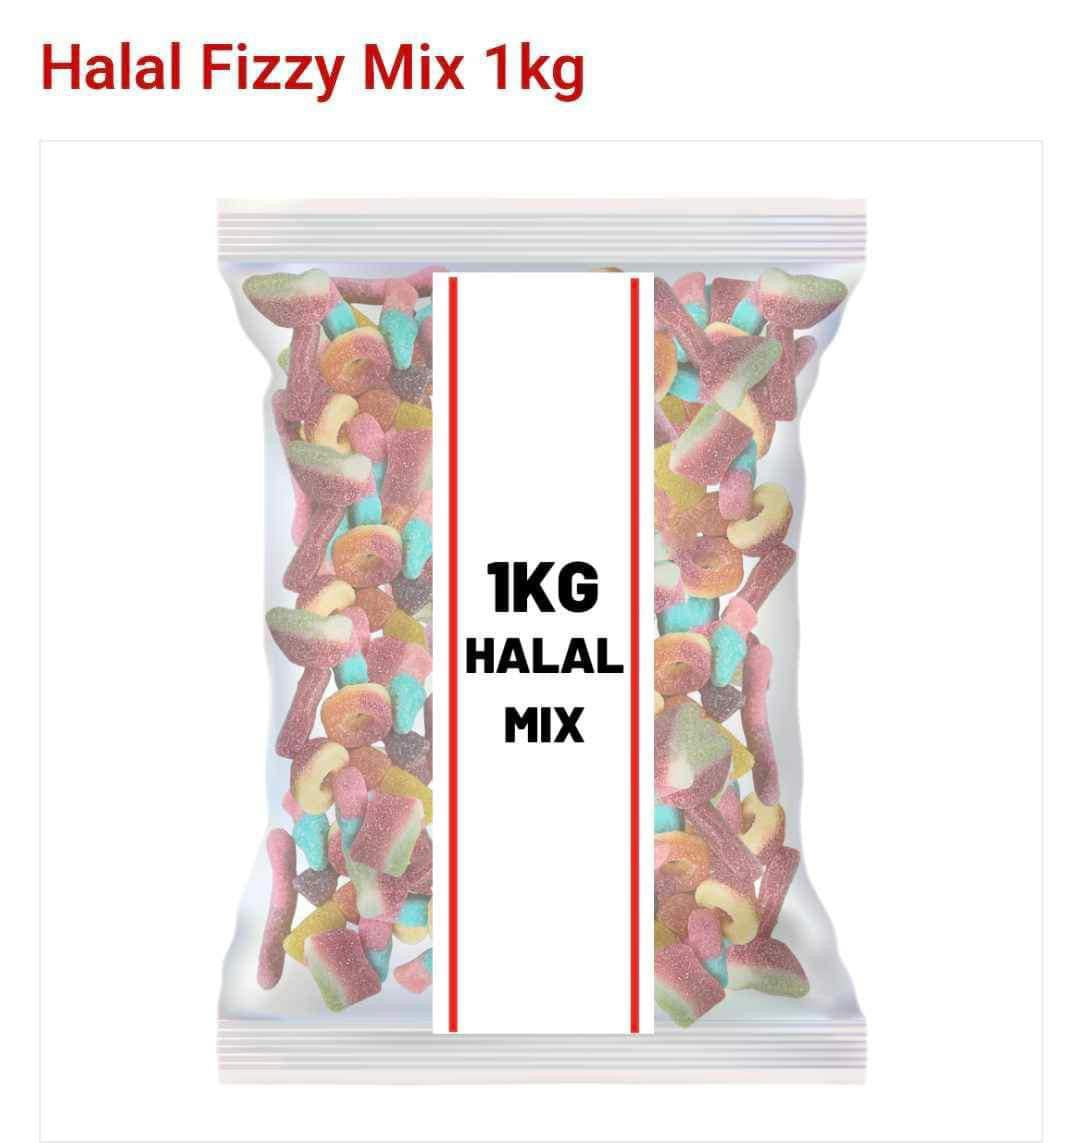 1 kg sweet mix